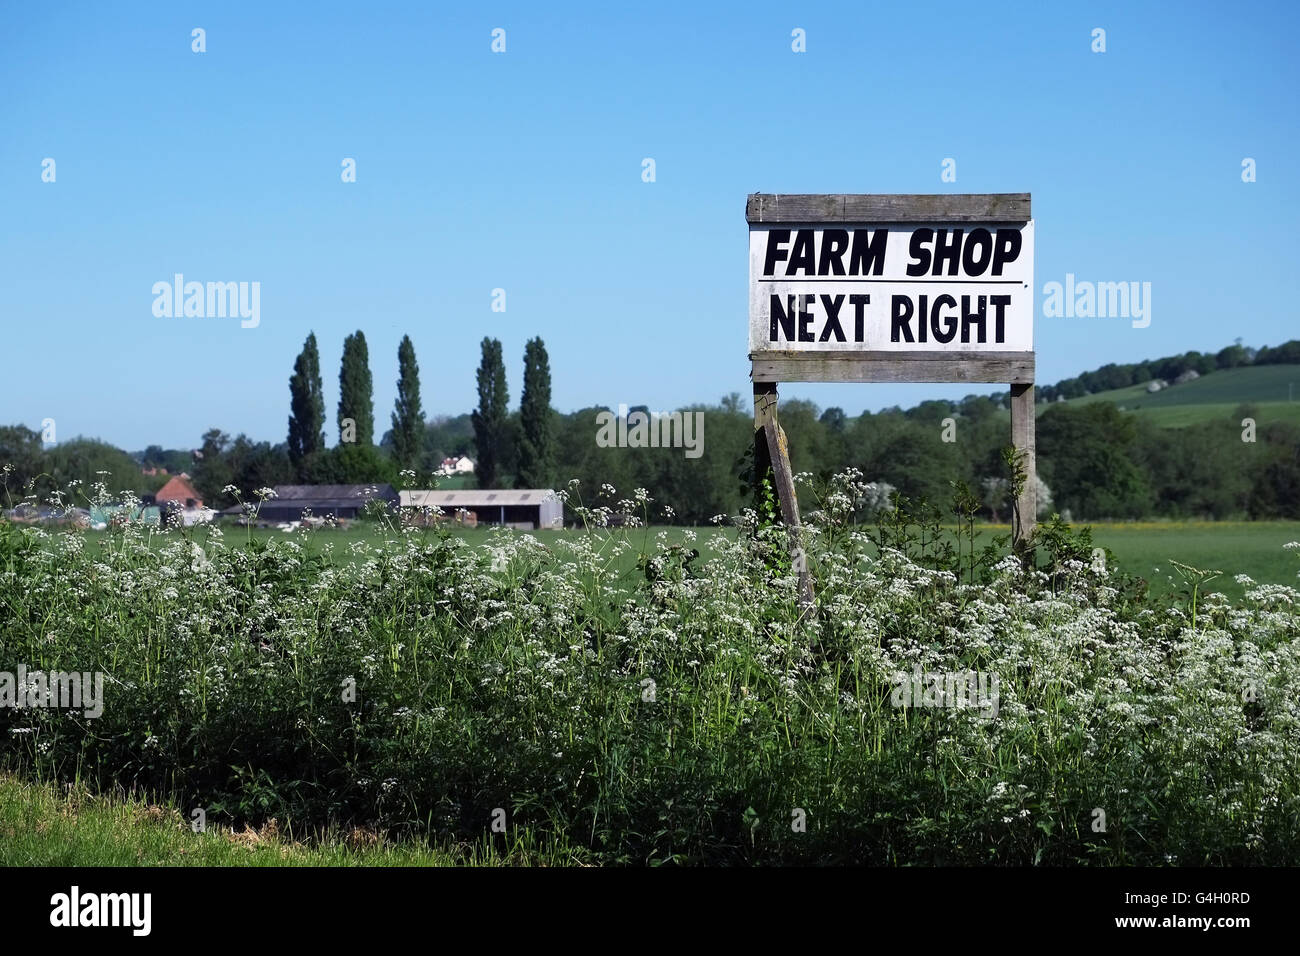 Farm Shop sign. Image taken in rural Warwickshire countryside near Newbold on Stour, England, UK. Stock Photo